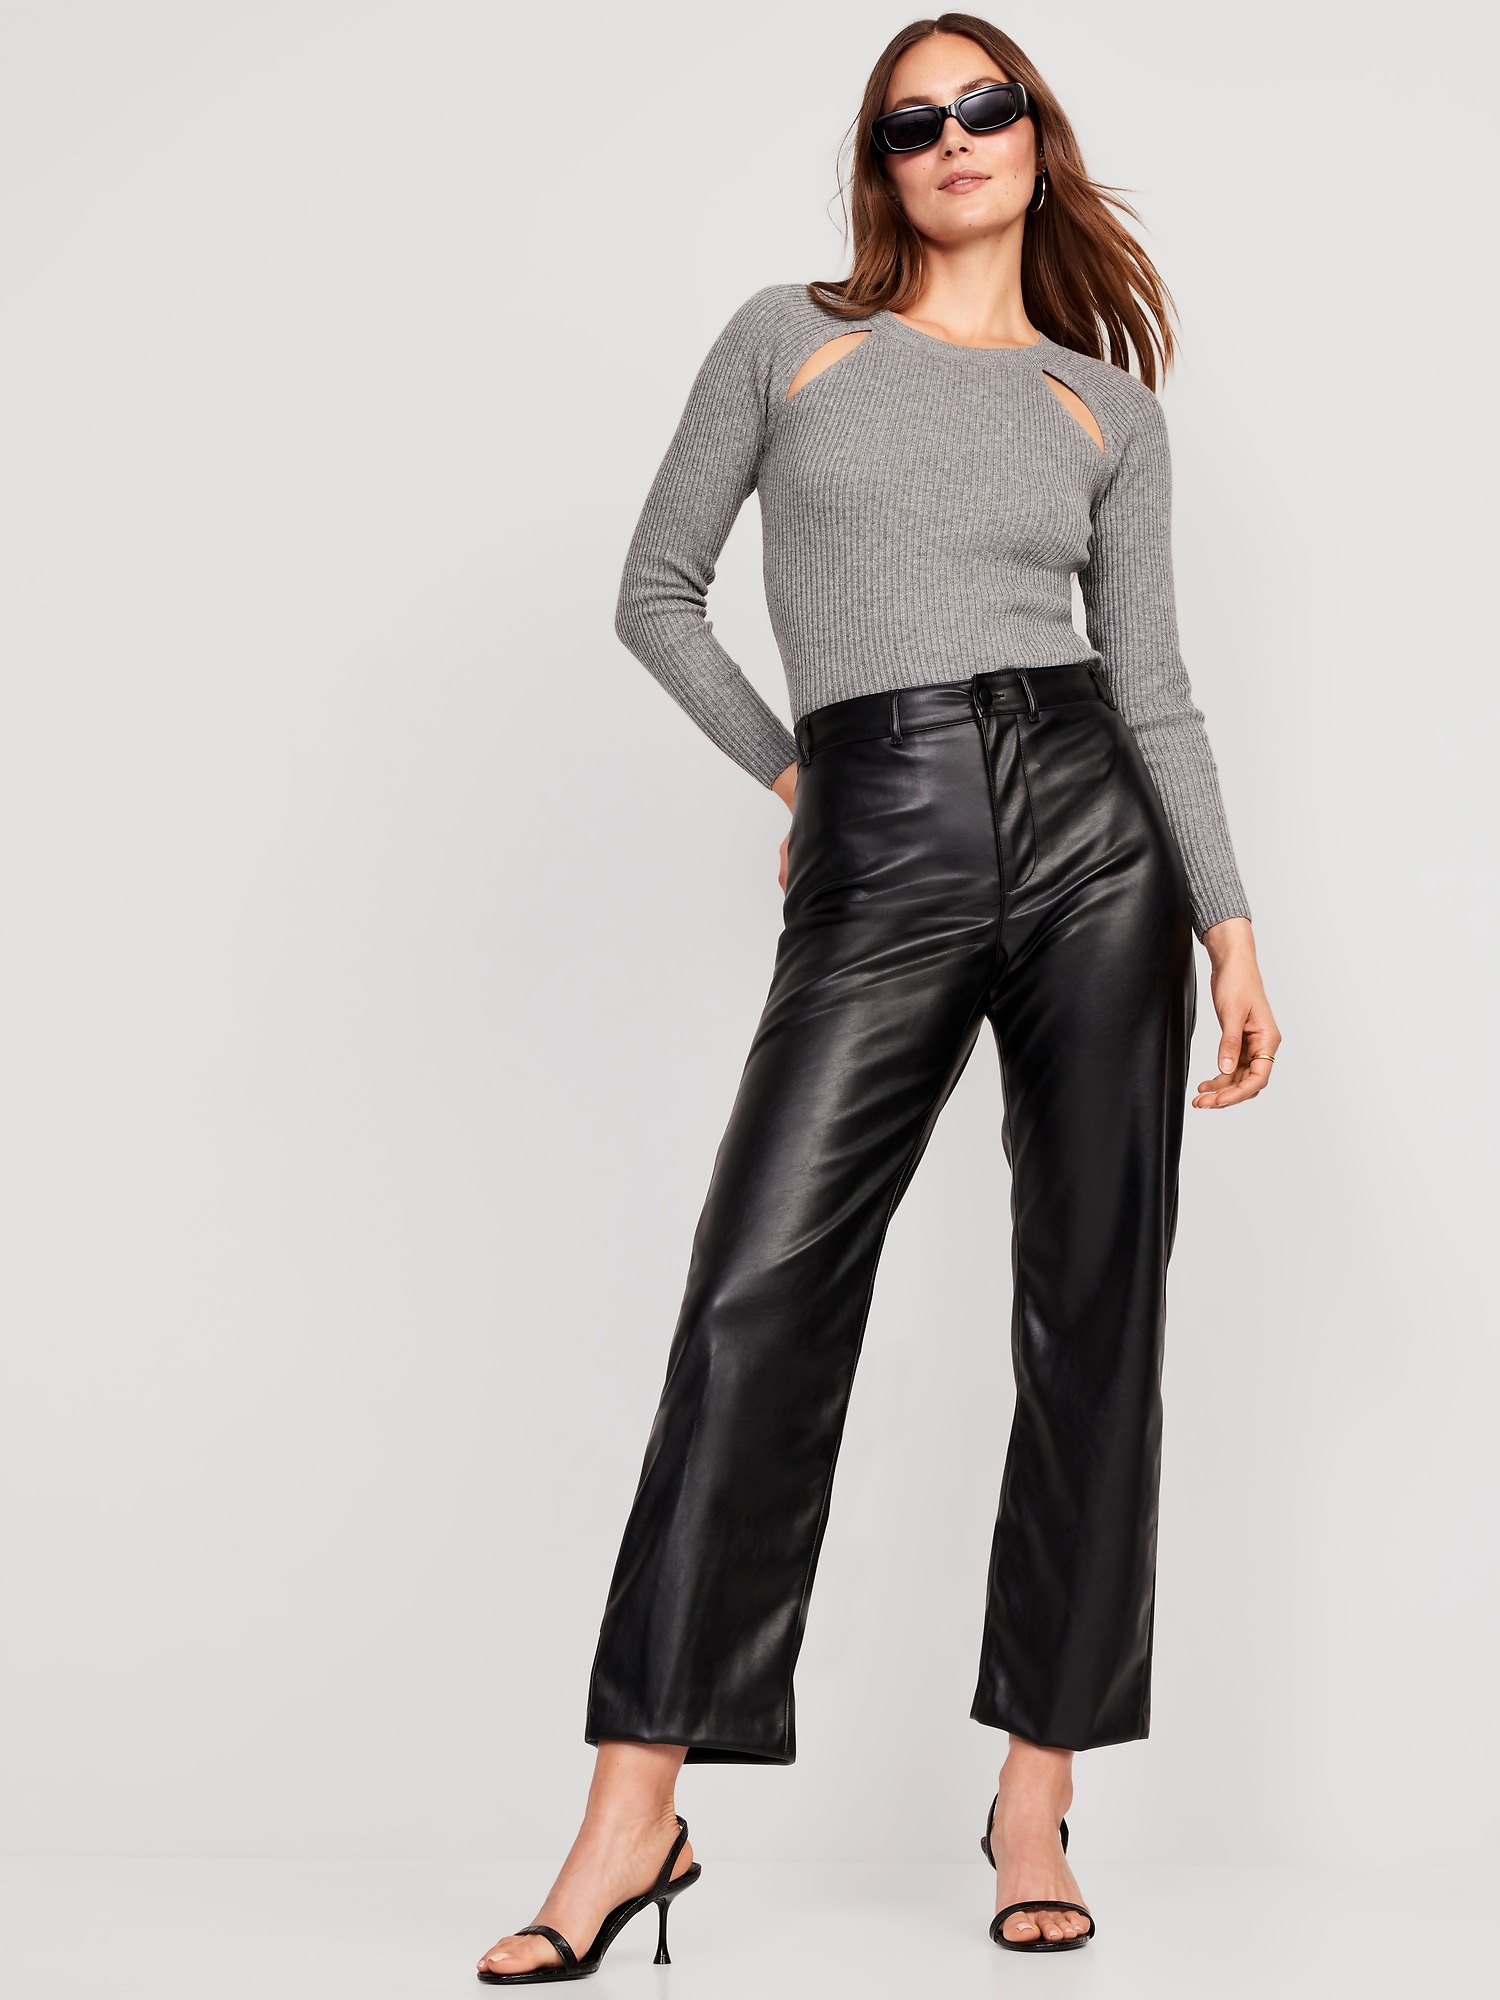 Fall trends wideleg leather pants  Cheryl Shops